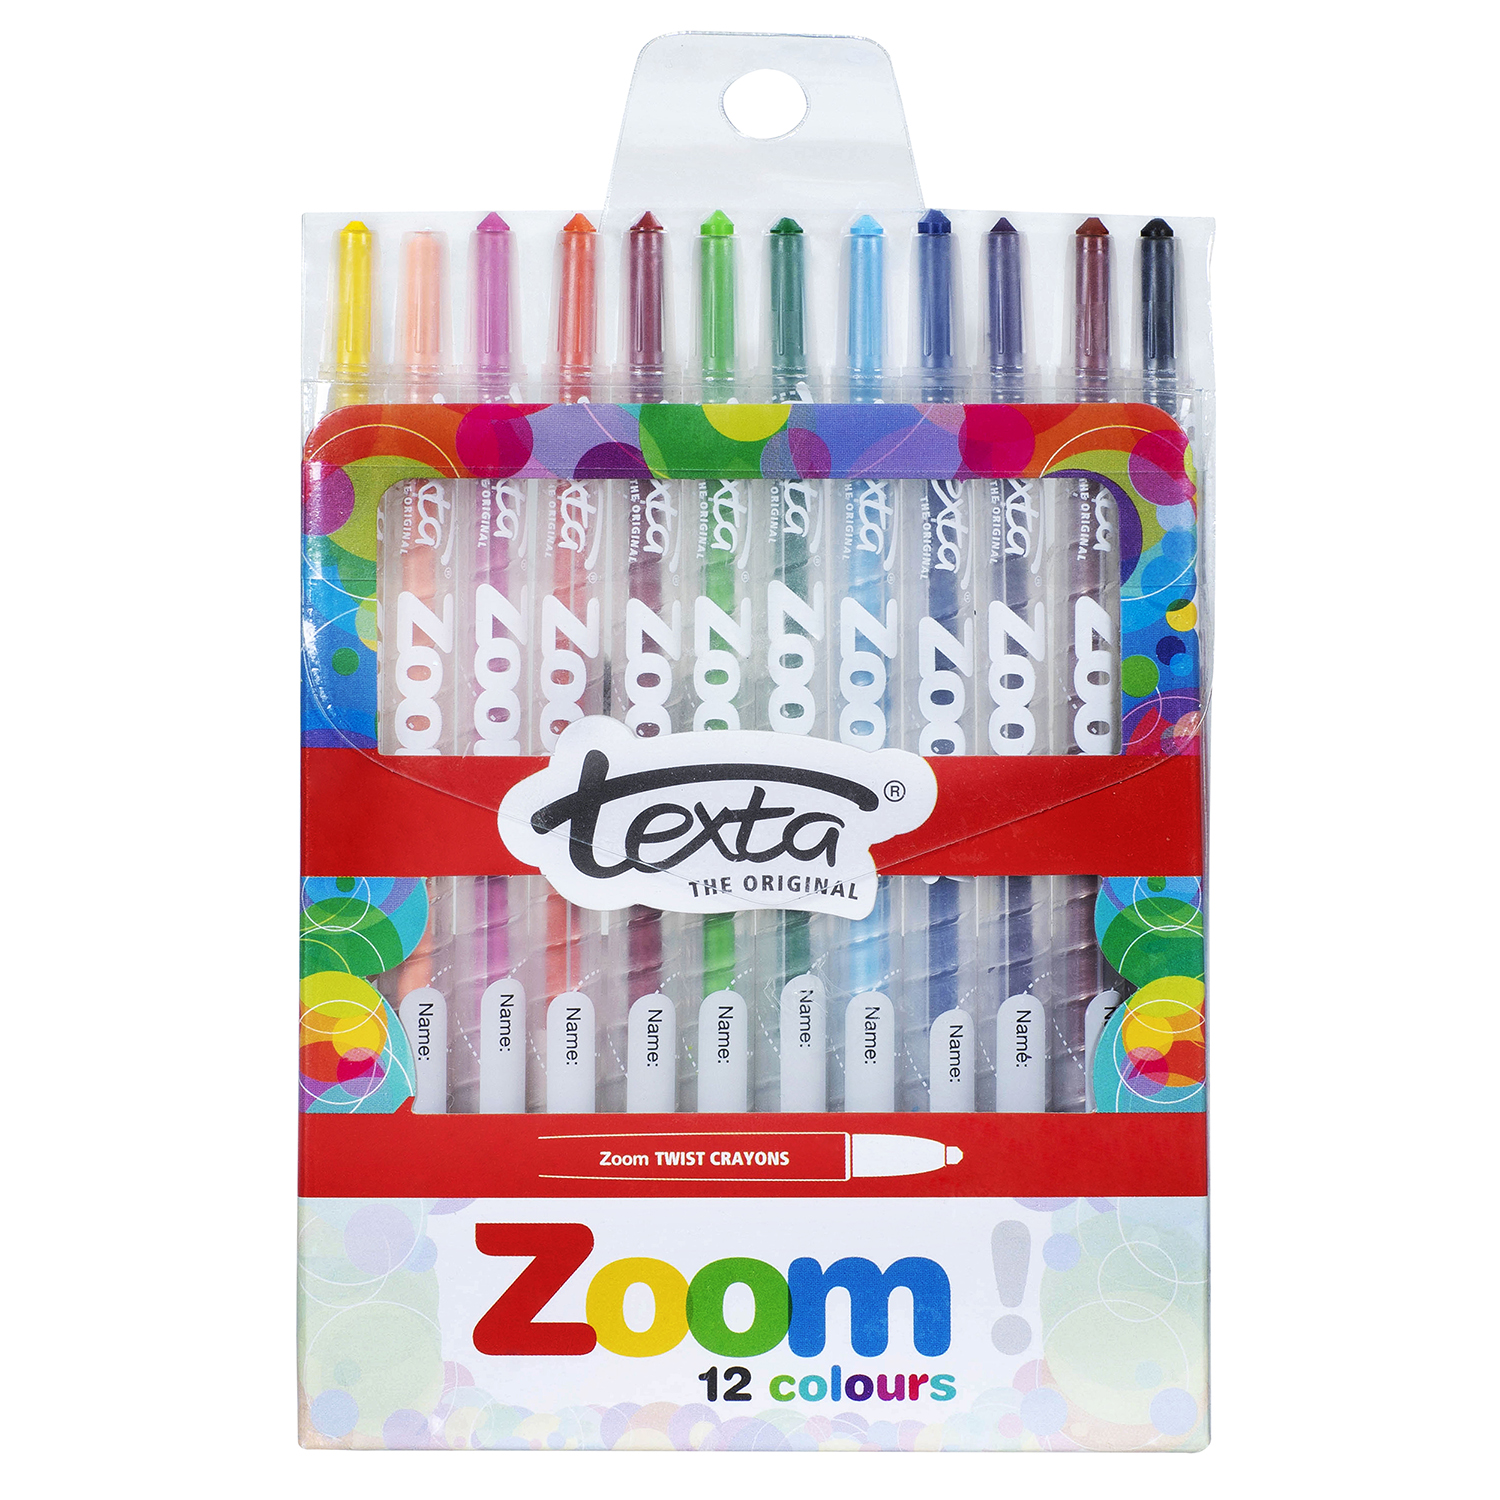 Zoom Twist Crayons